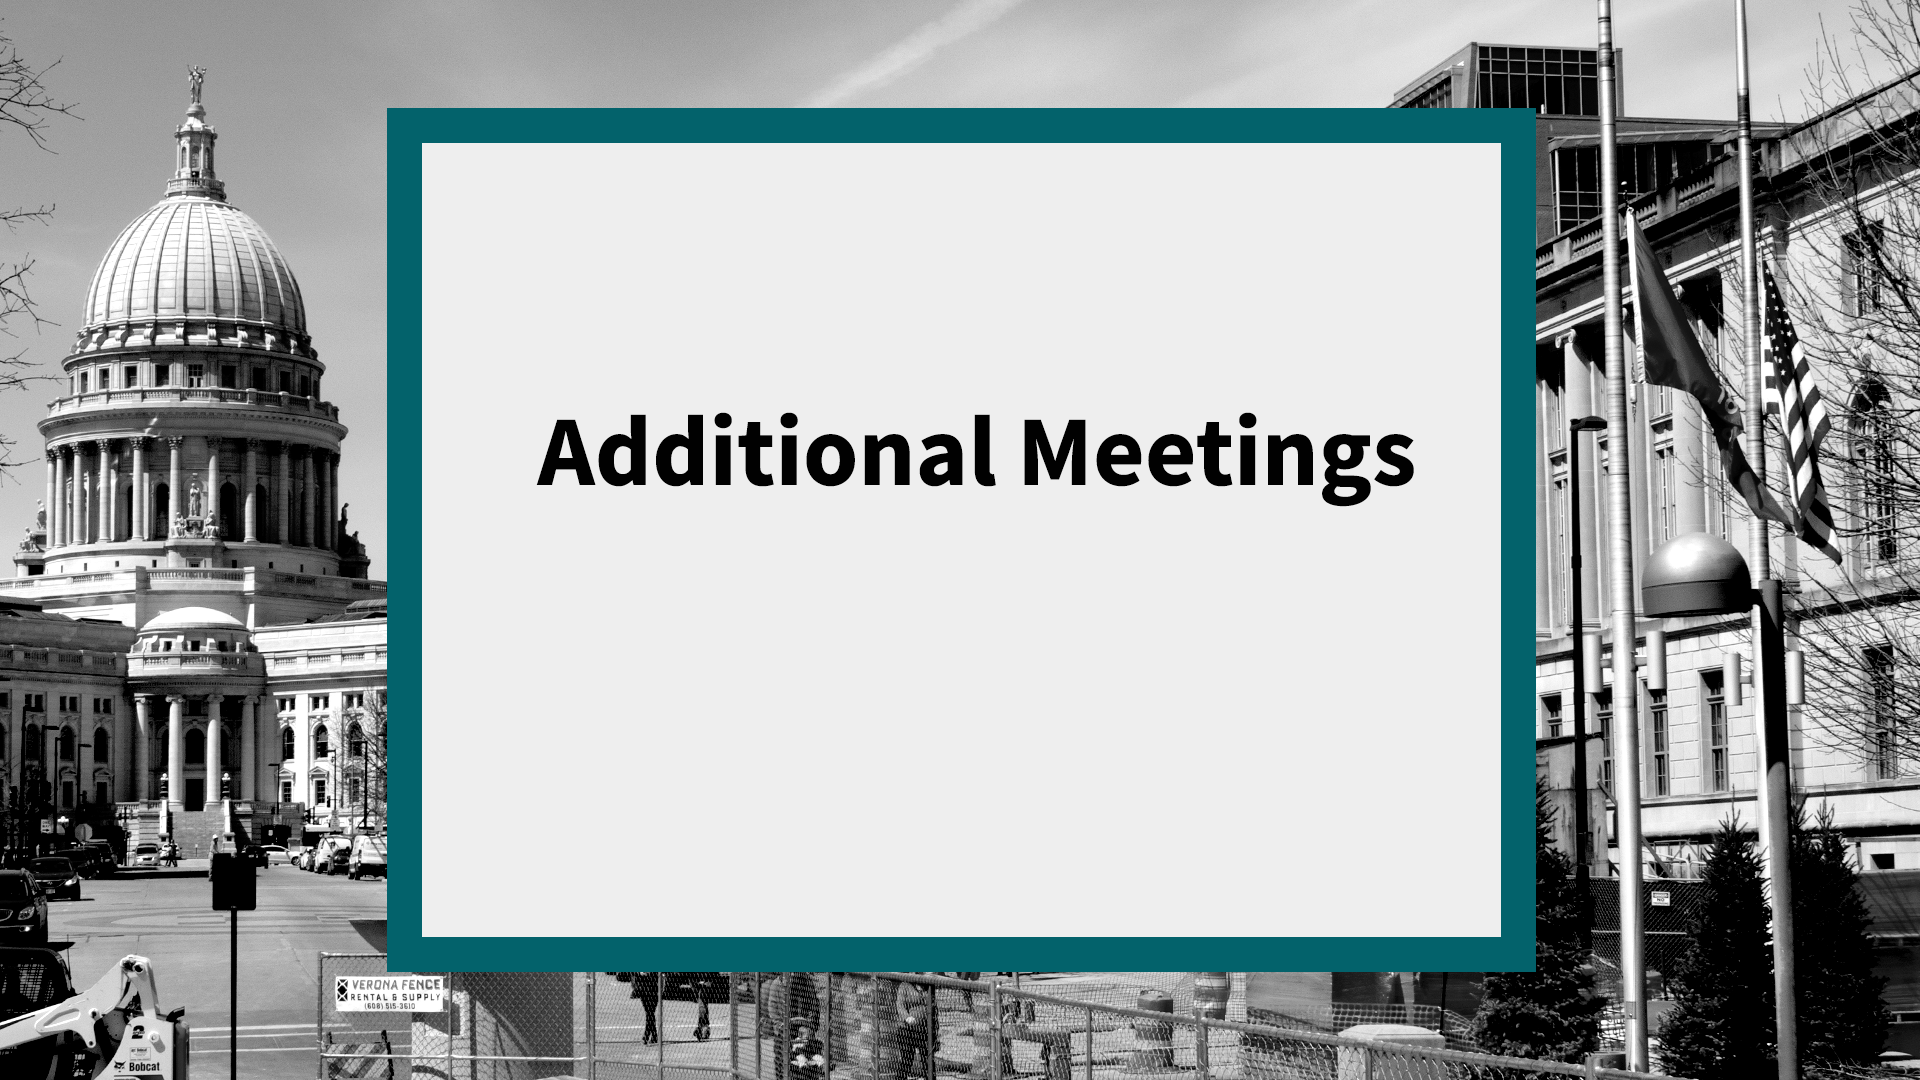 Additional Meetings